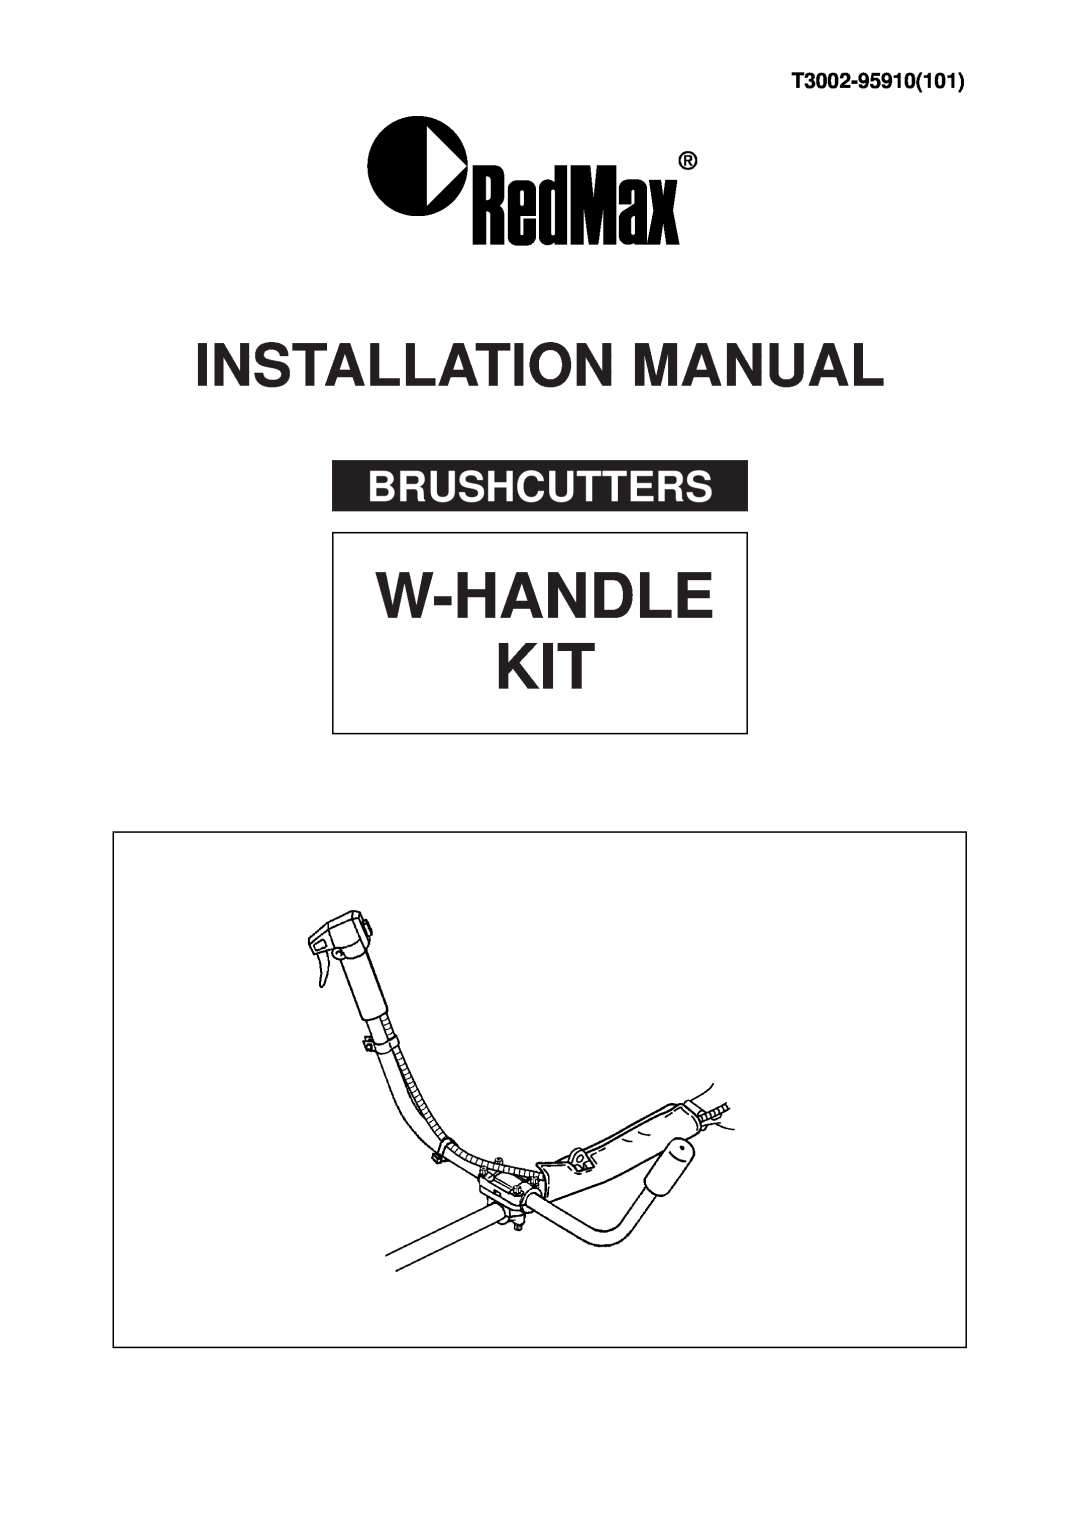 Zenoah T3002-95910(101) installation manual T3002-95910101, W-Handle Kit, Installation Manual, Brushcutters 